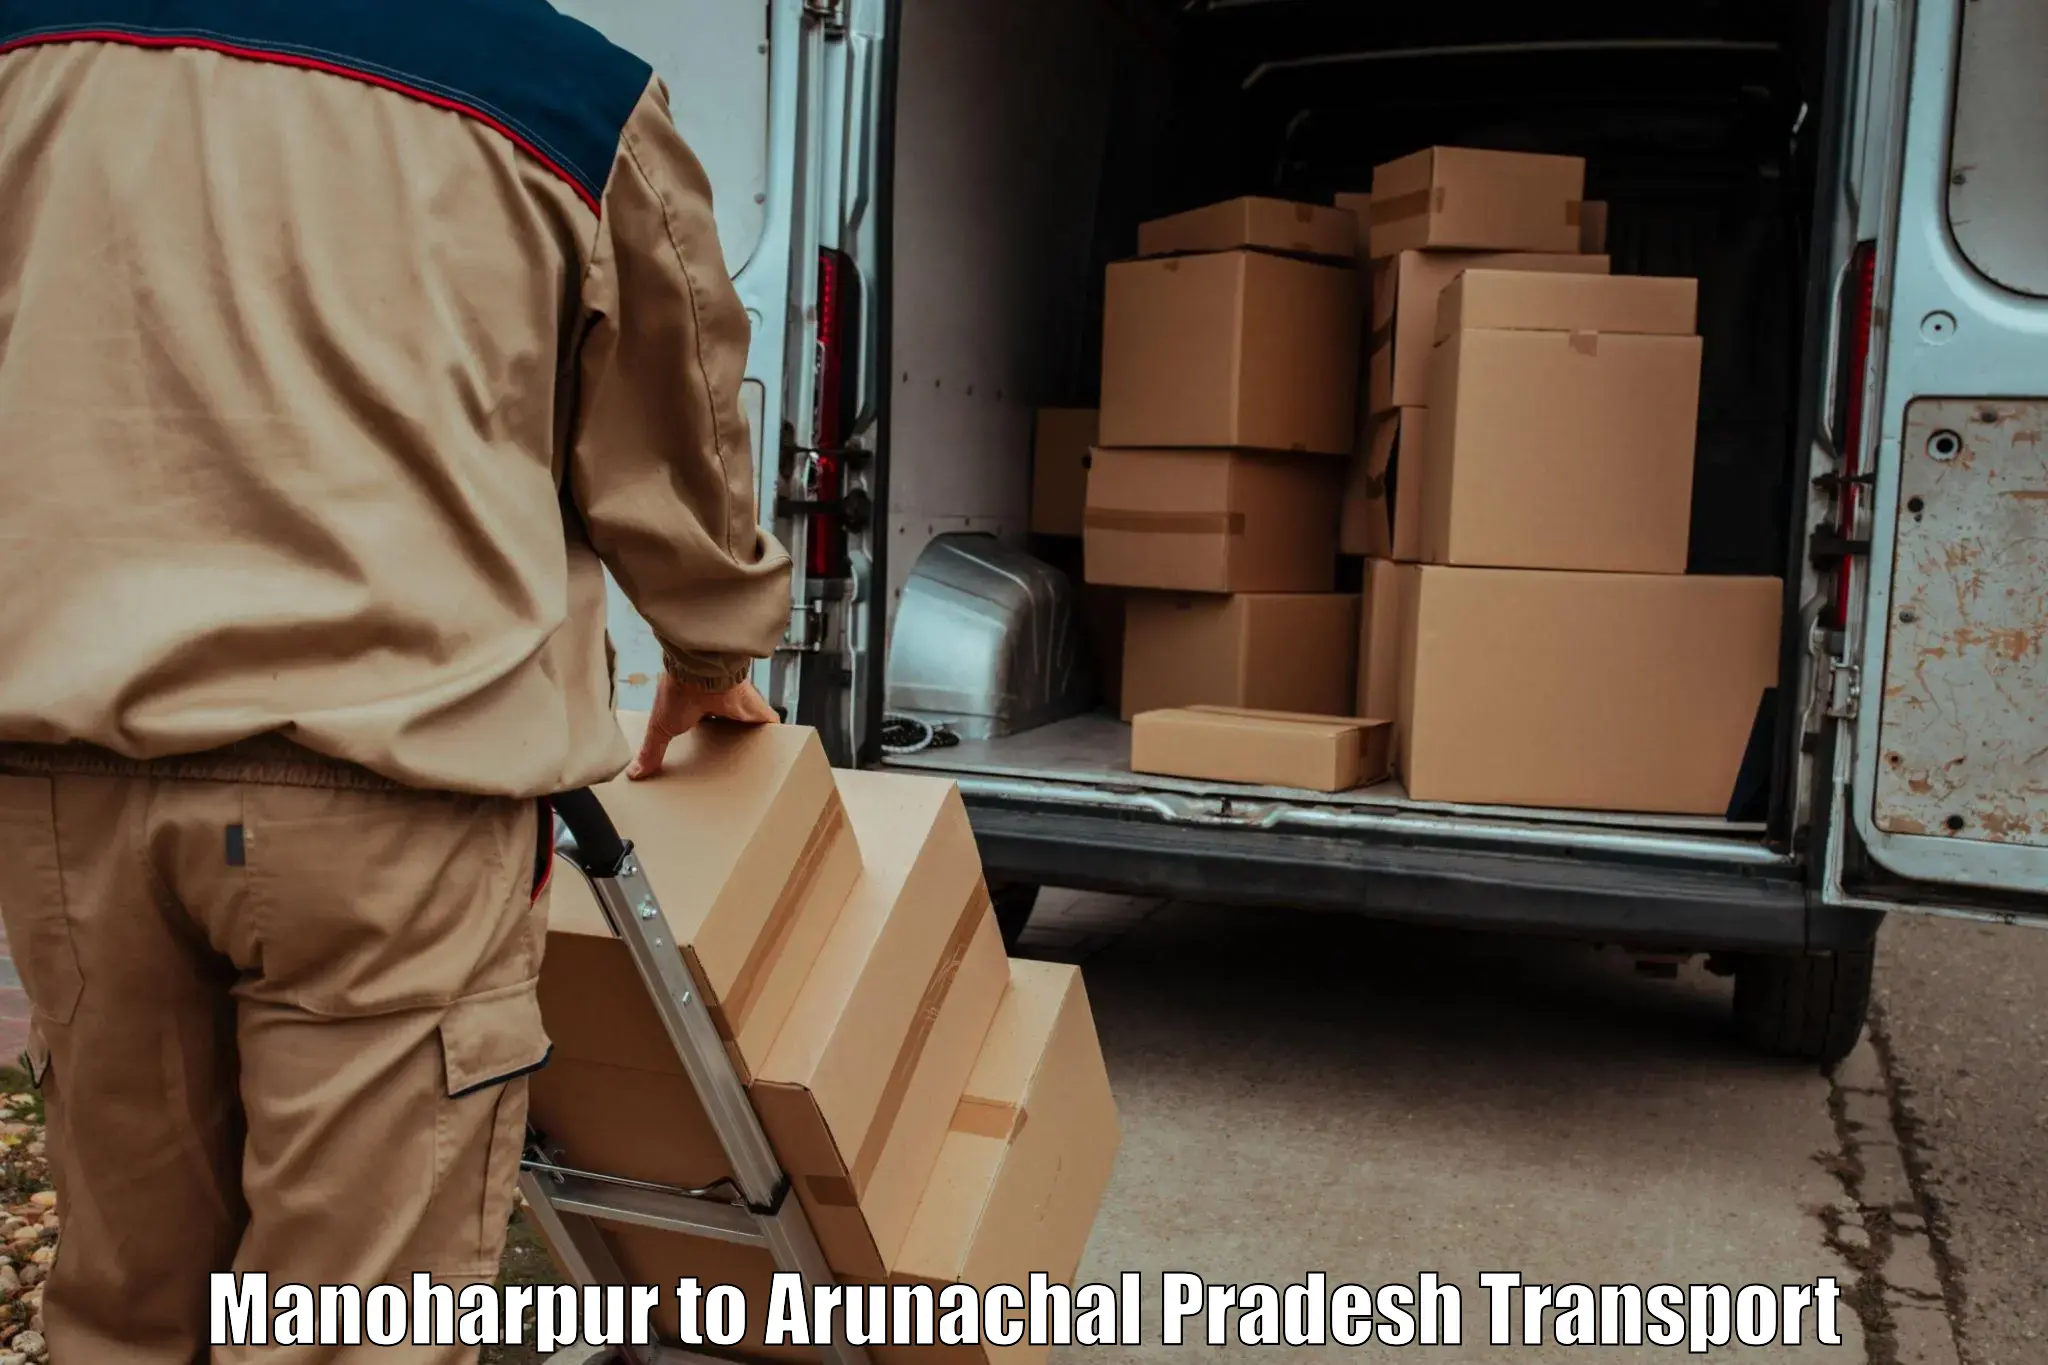 Truck transport companies in India Manoharpur to Lohit